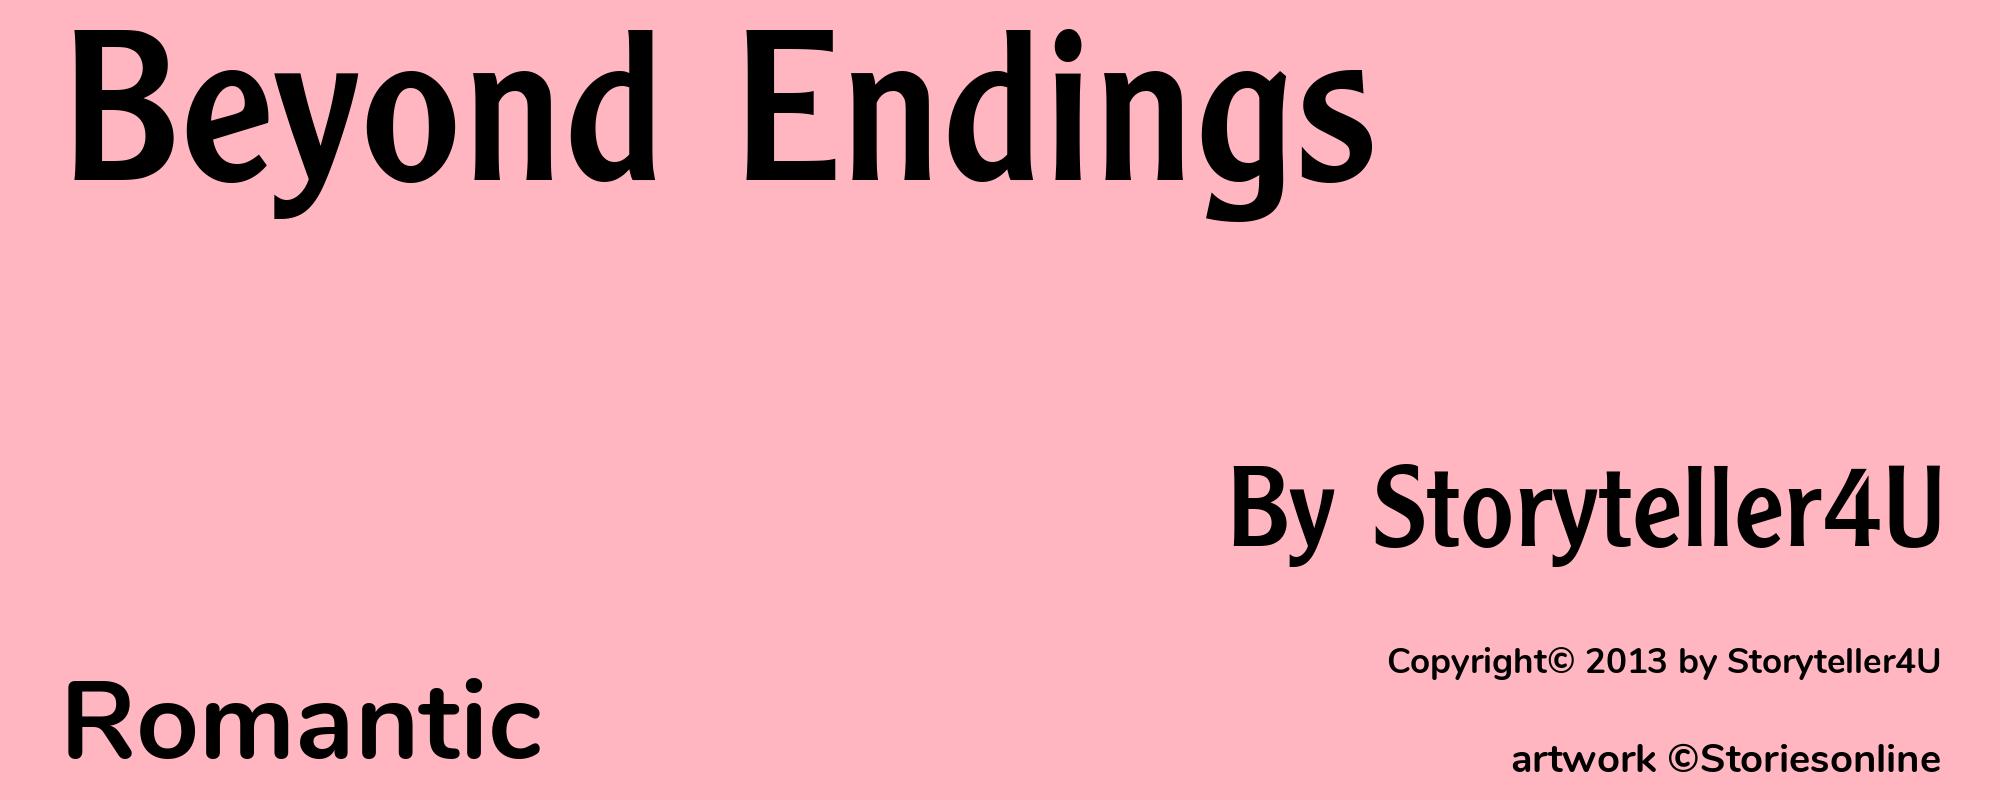 Beyond Endings - Cover